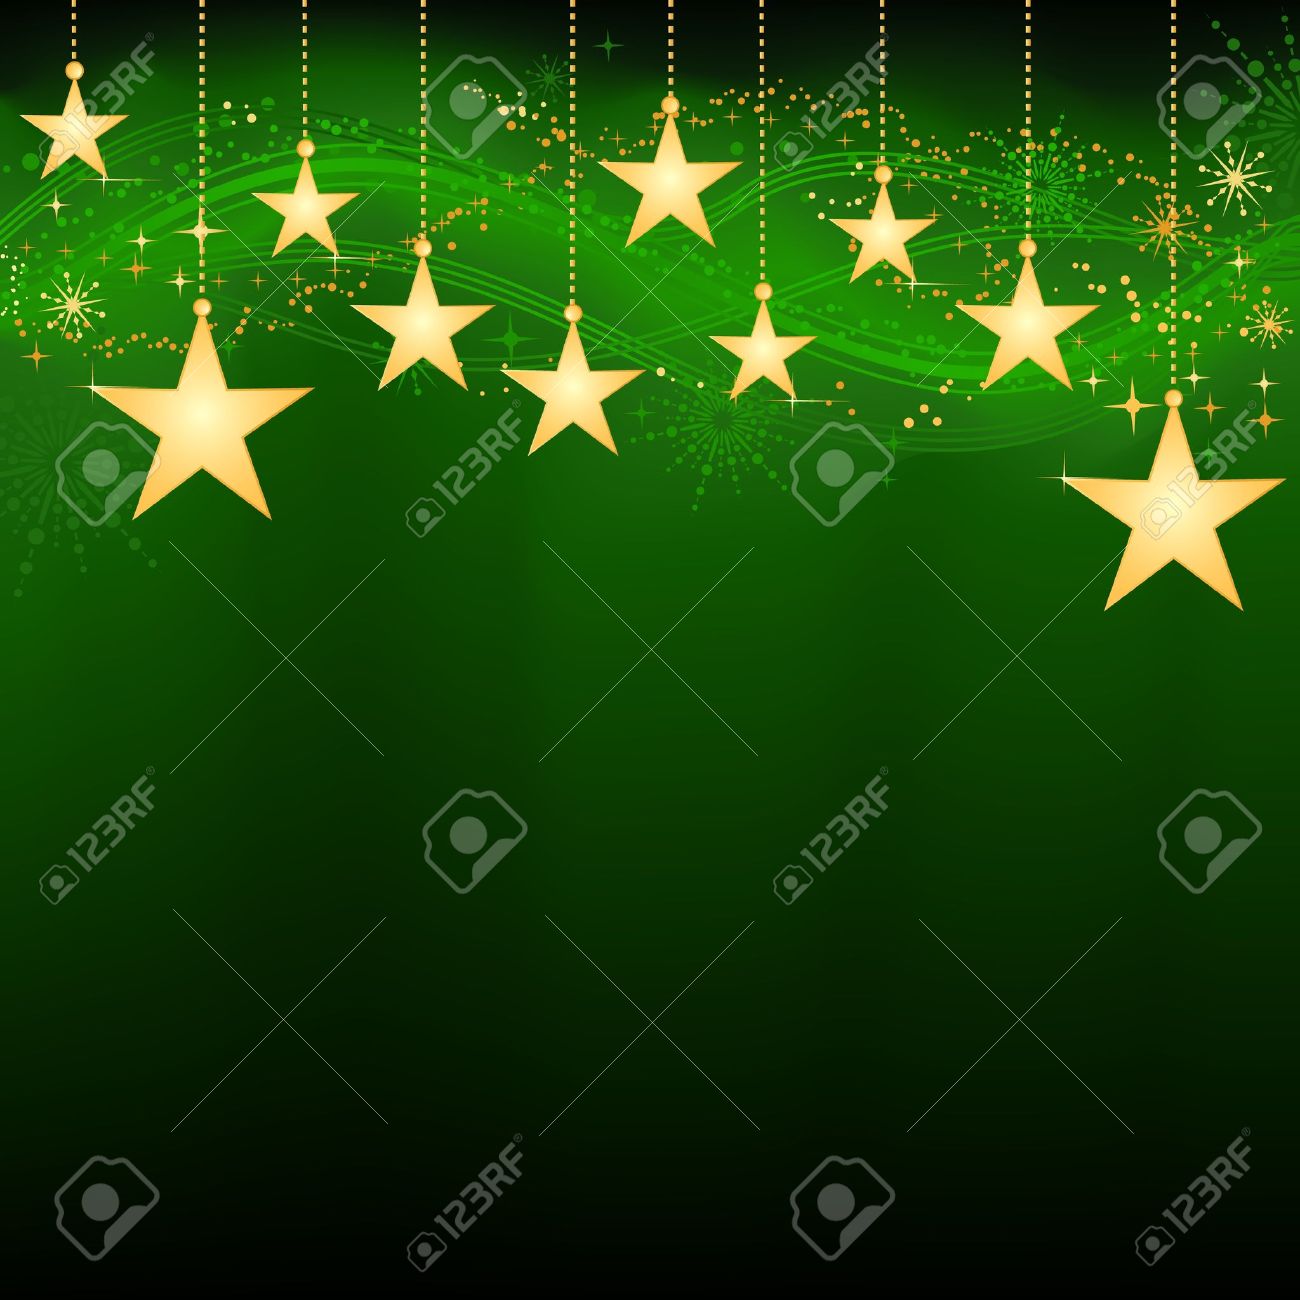 Festive Dark Green Christmas Background With Golden Stars Snow